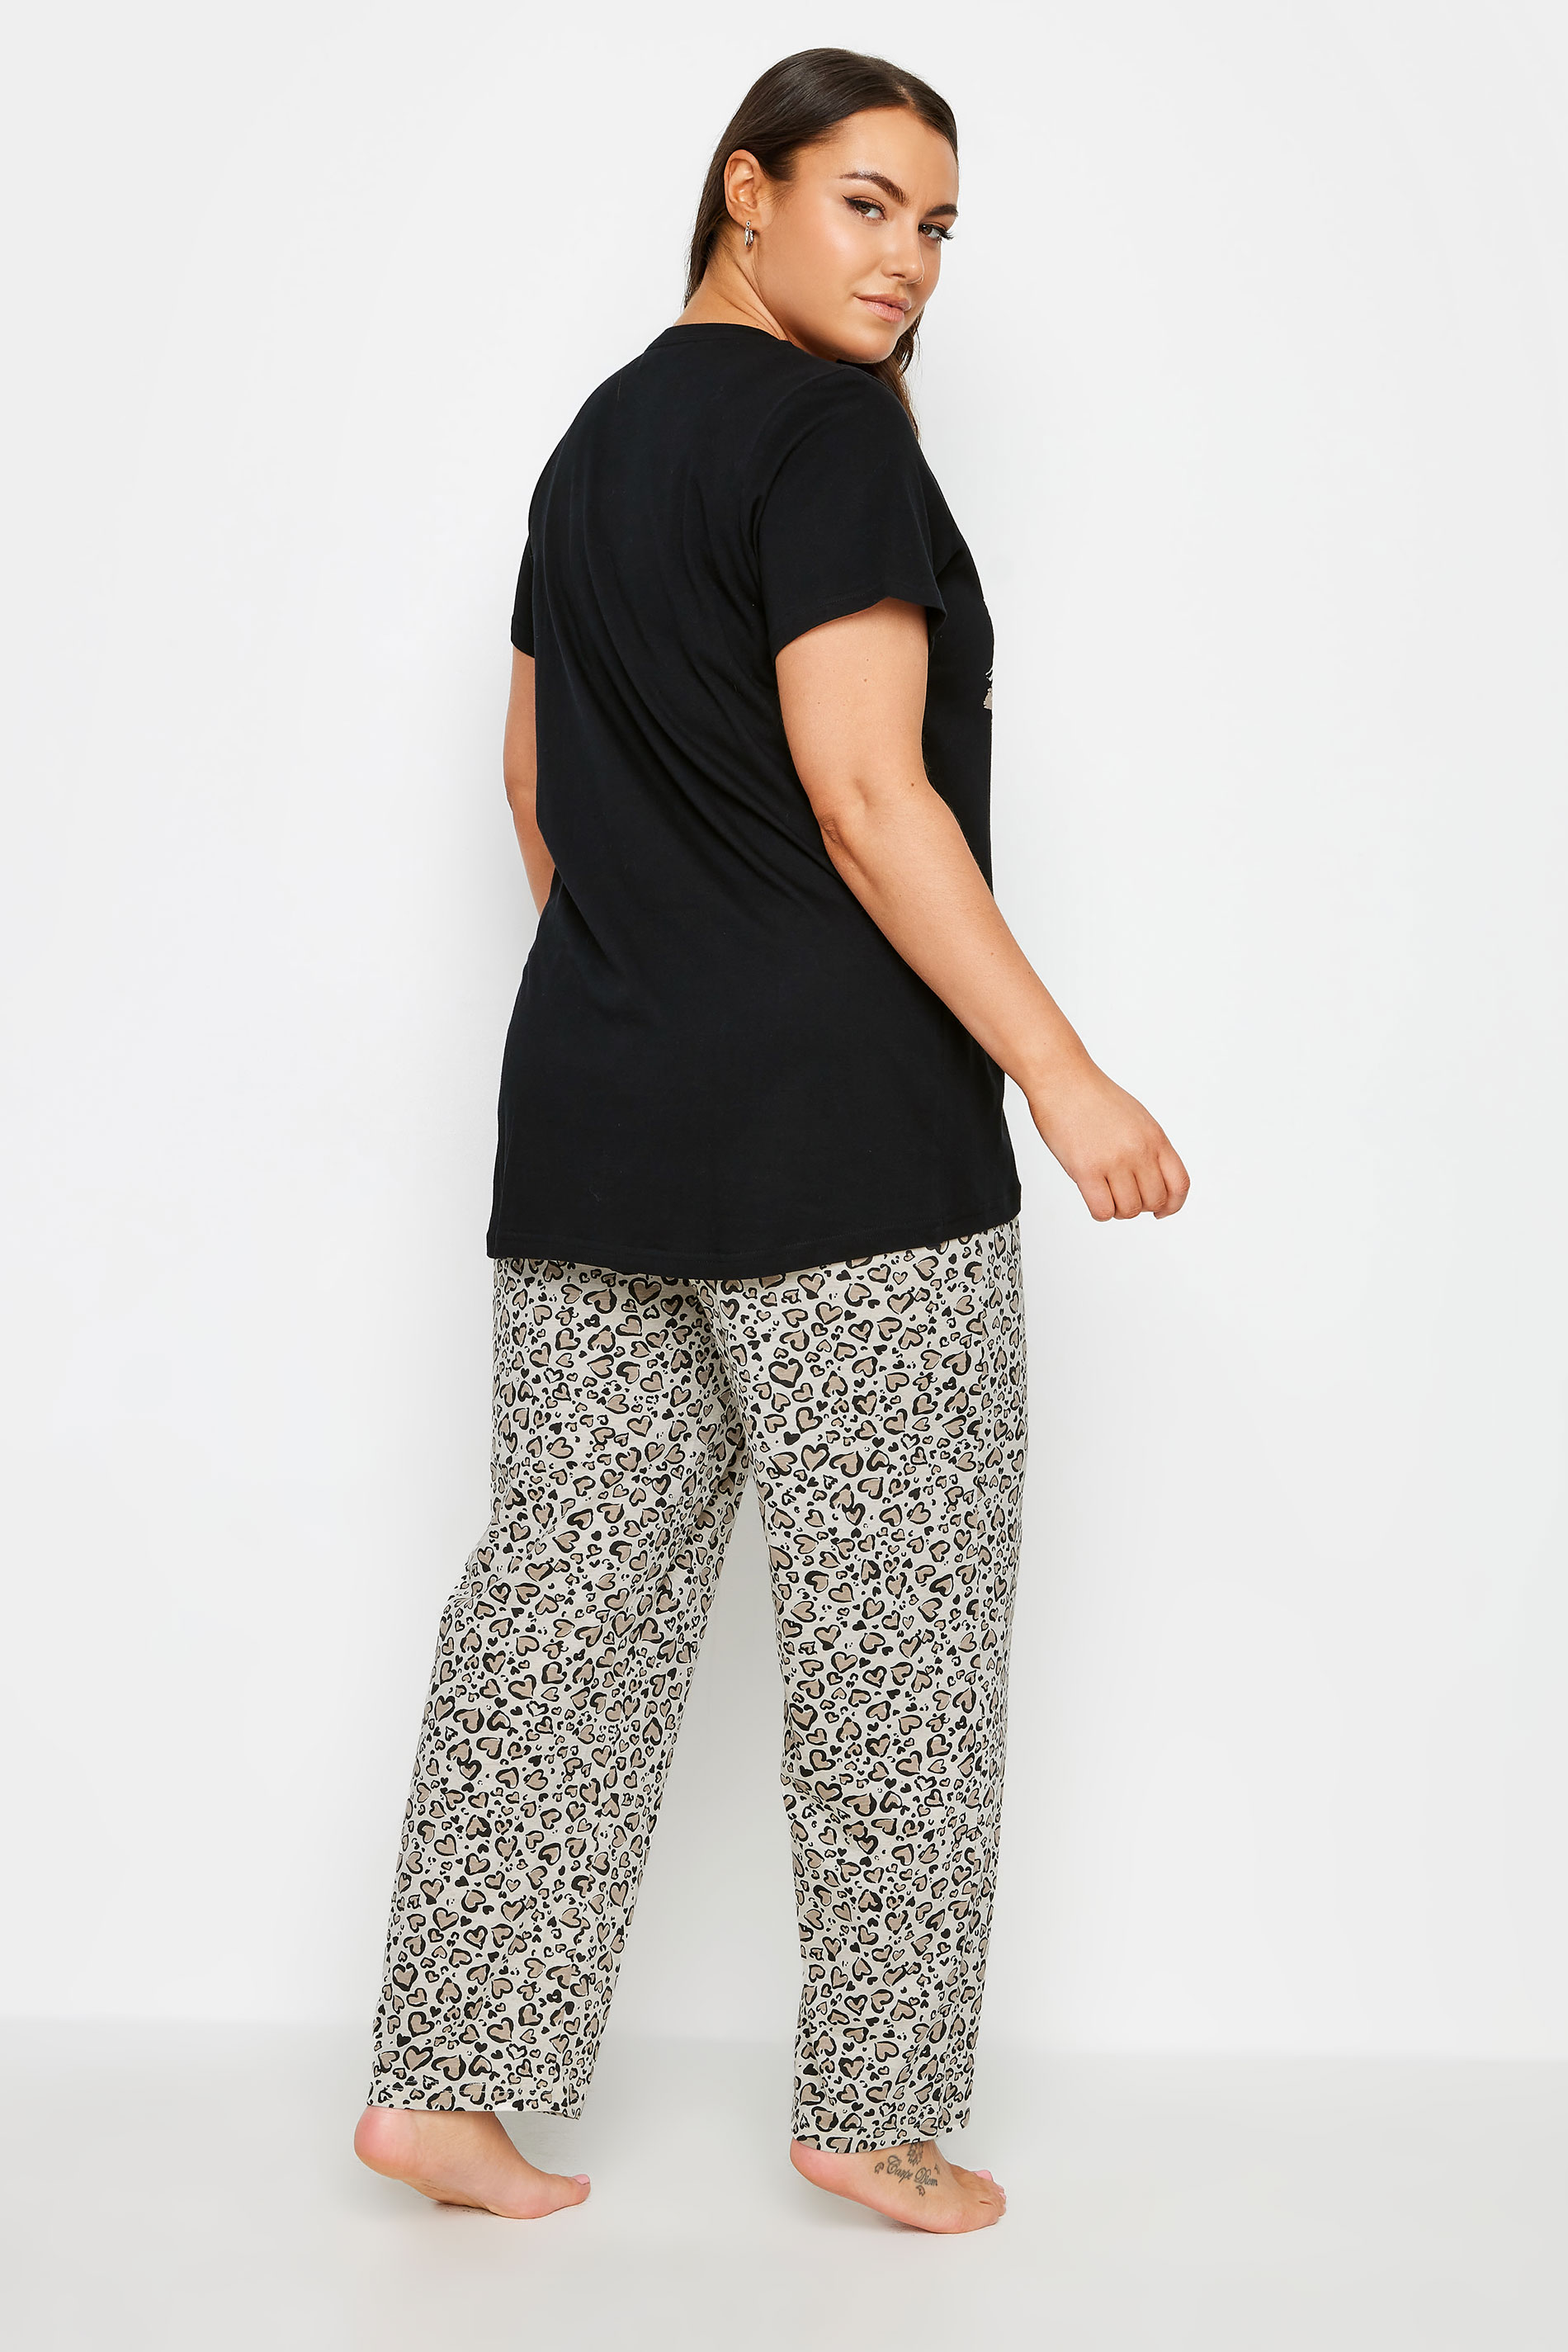 YOURS Plus Size Black 'Wild At Heart' Animal Print Pyjama Set | Yours Clothing 3